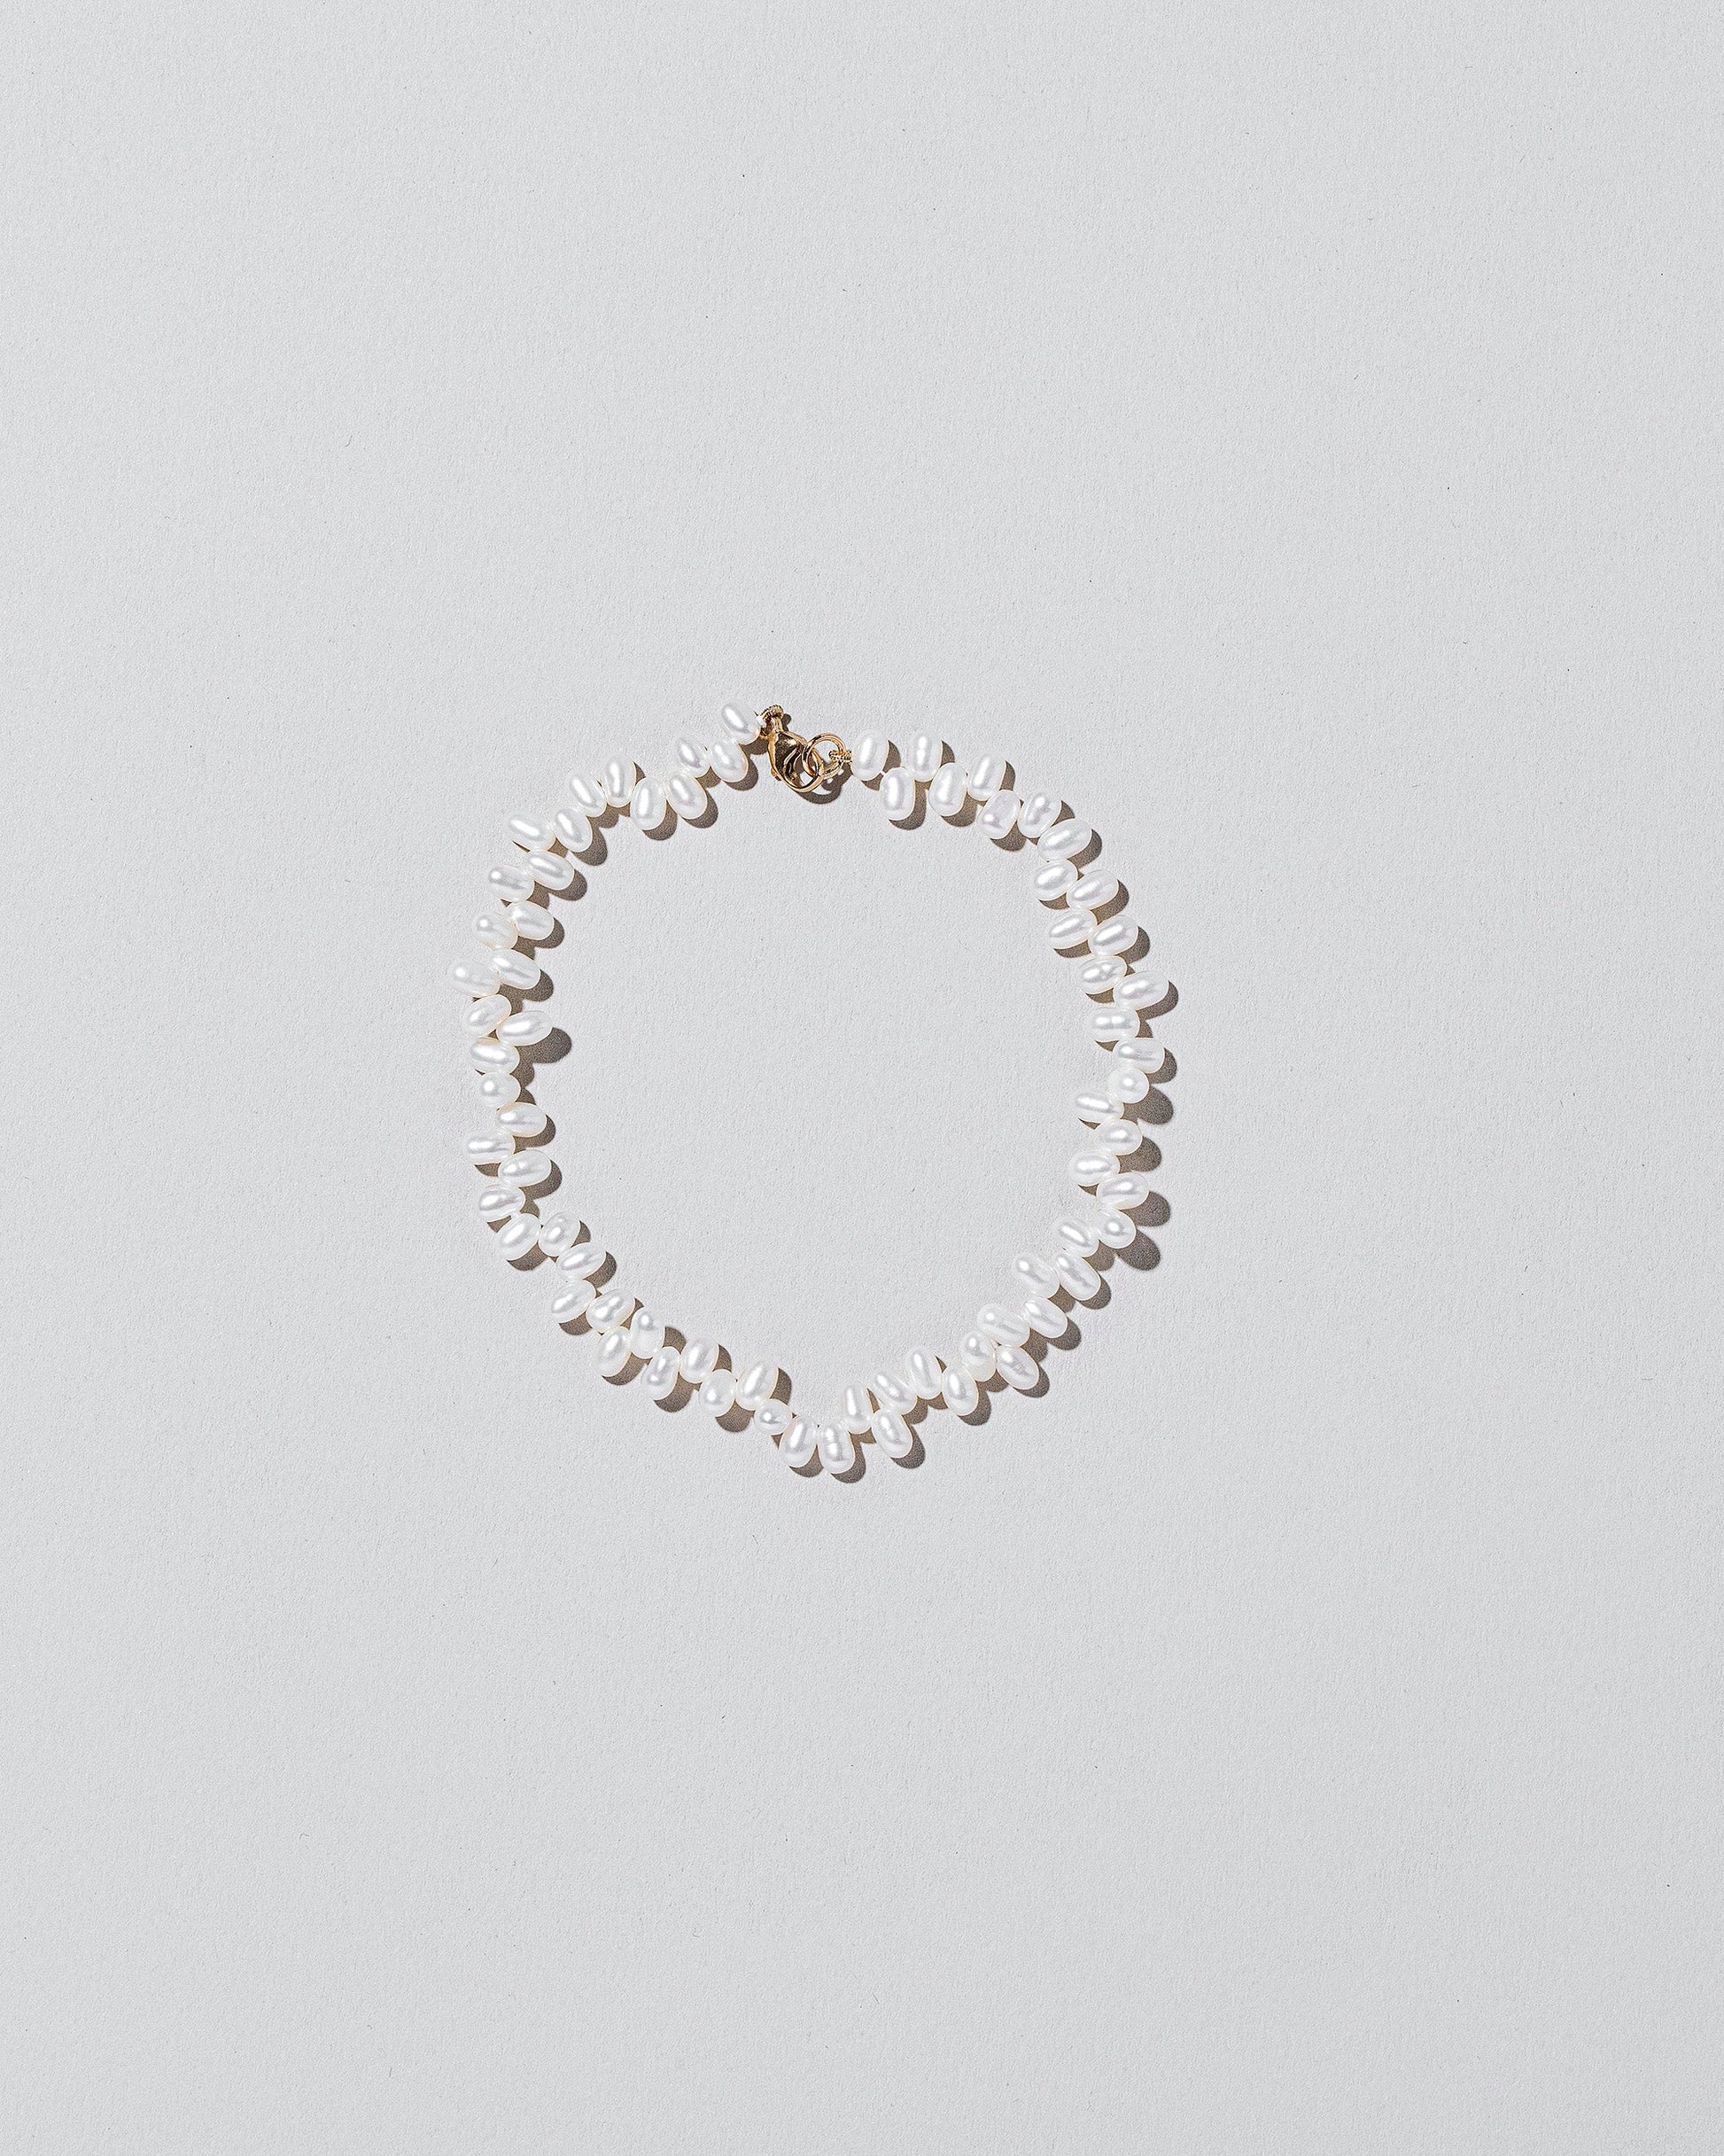  Zipper Pearl Bracelet on light color background.